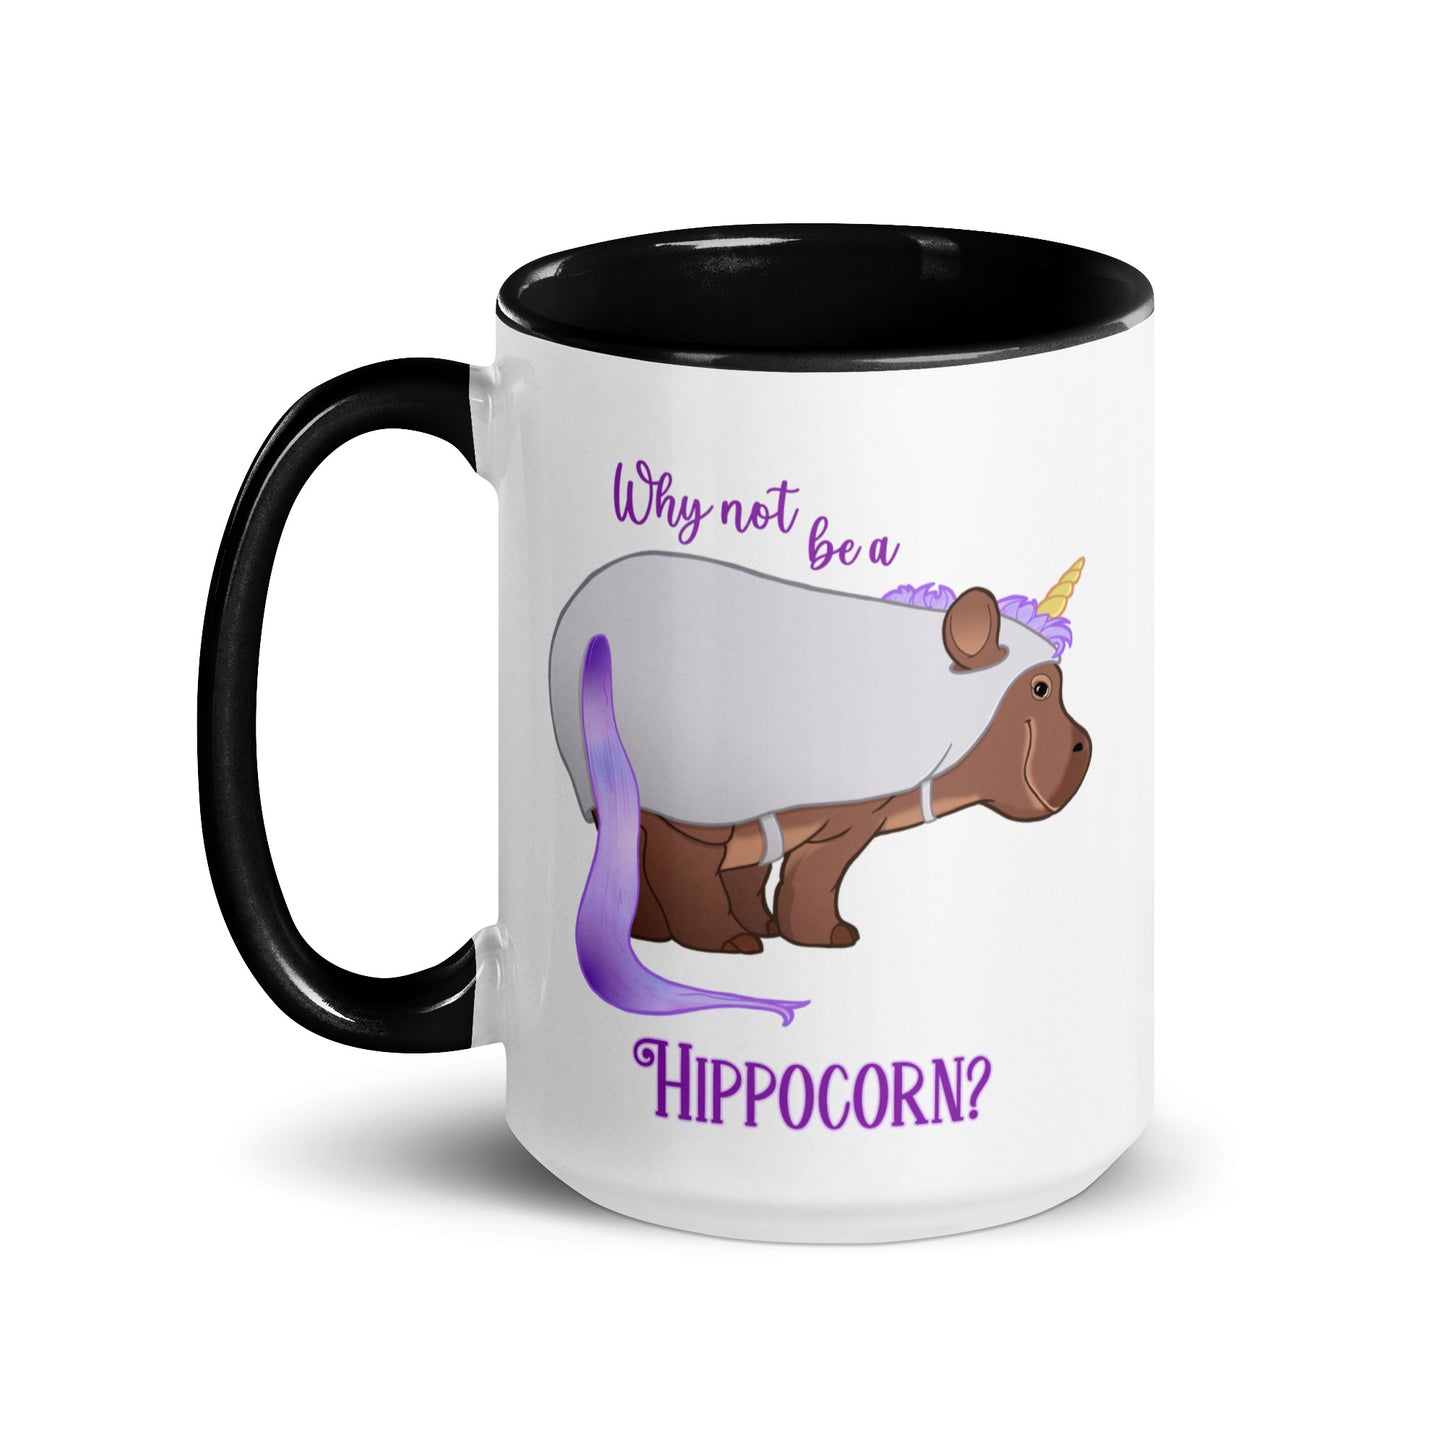 Dash the Hippocorn Mug in two sizes